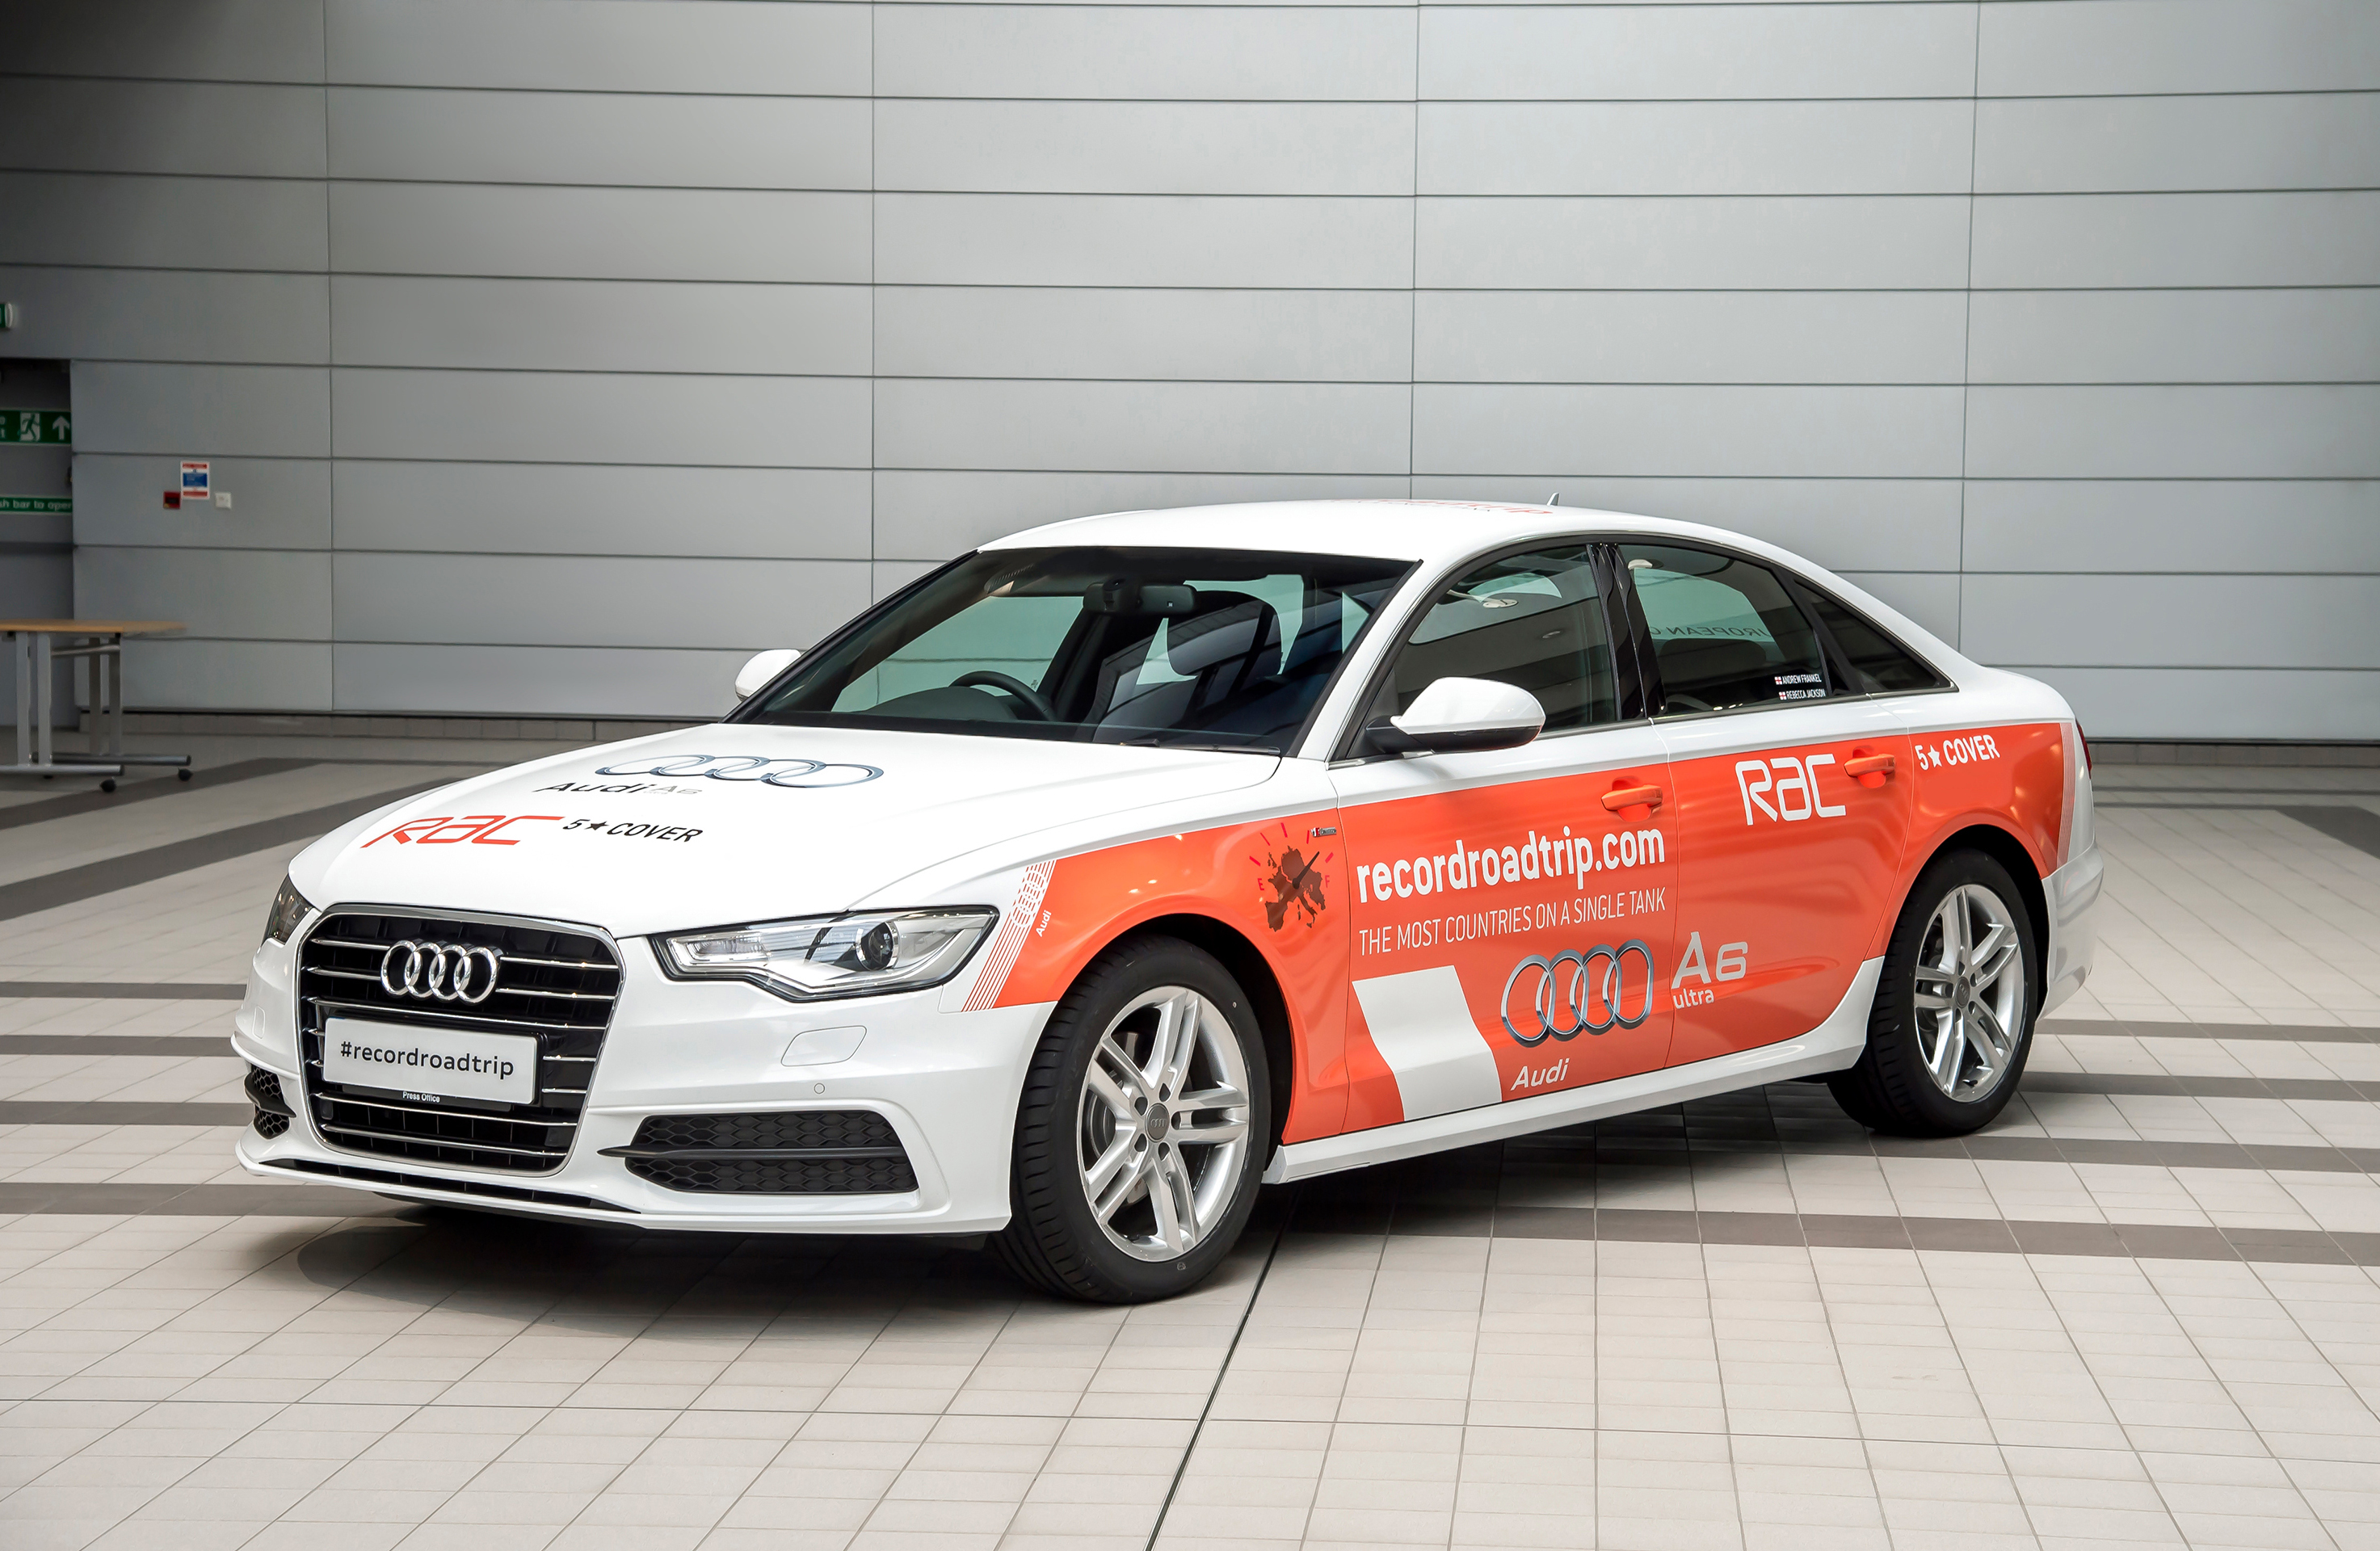 Audi A6 in fuel economy world record attempt